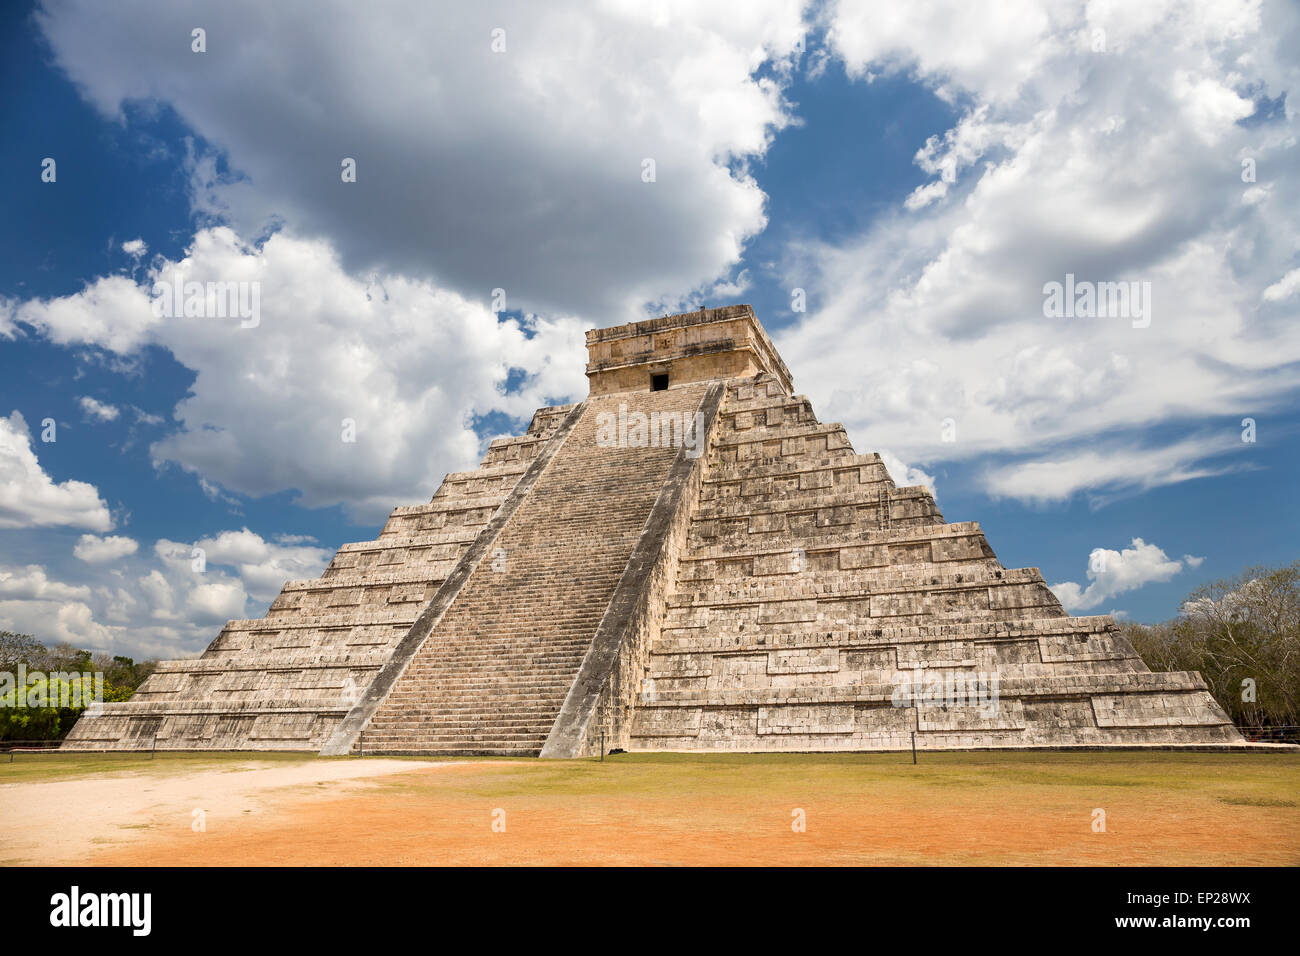 El Castillo (le Temple) Kukulkan de Chichen Itza pyramide maya, au Yucatan, Mexique Banque D'Images